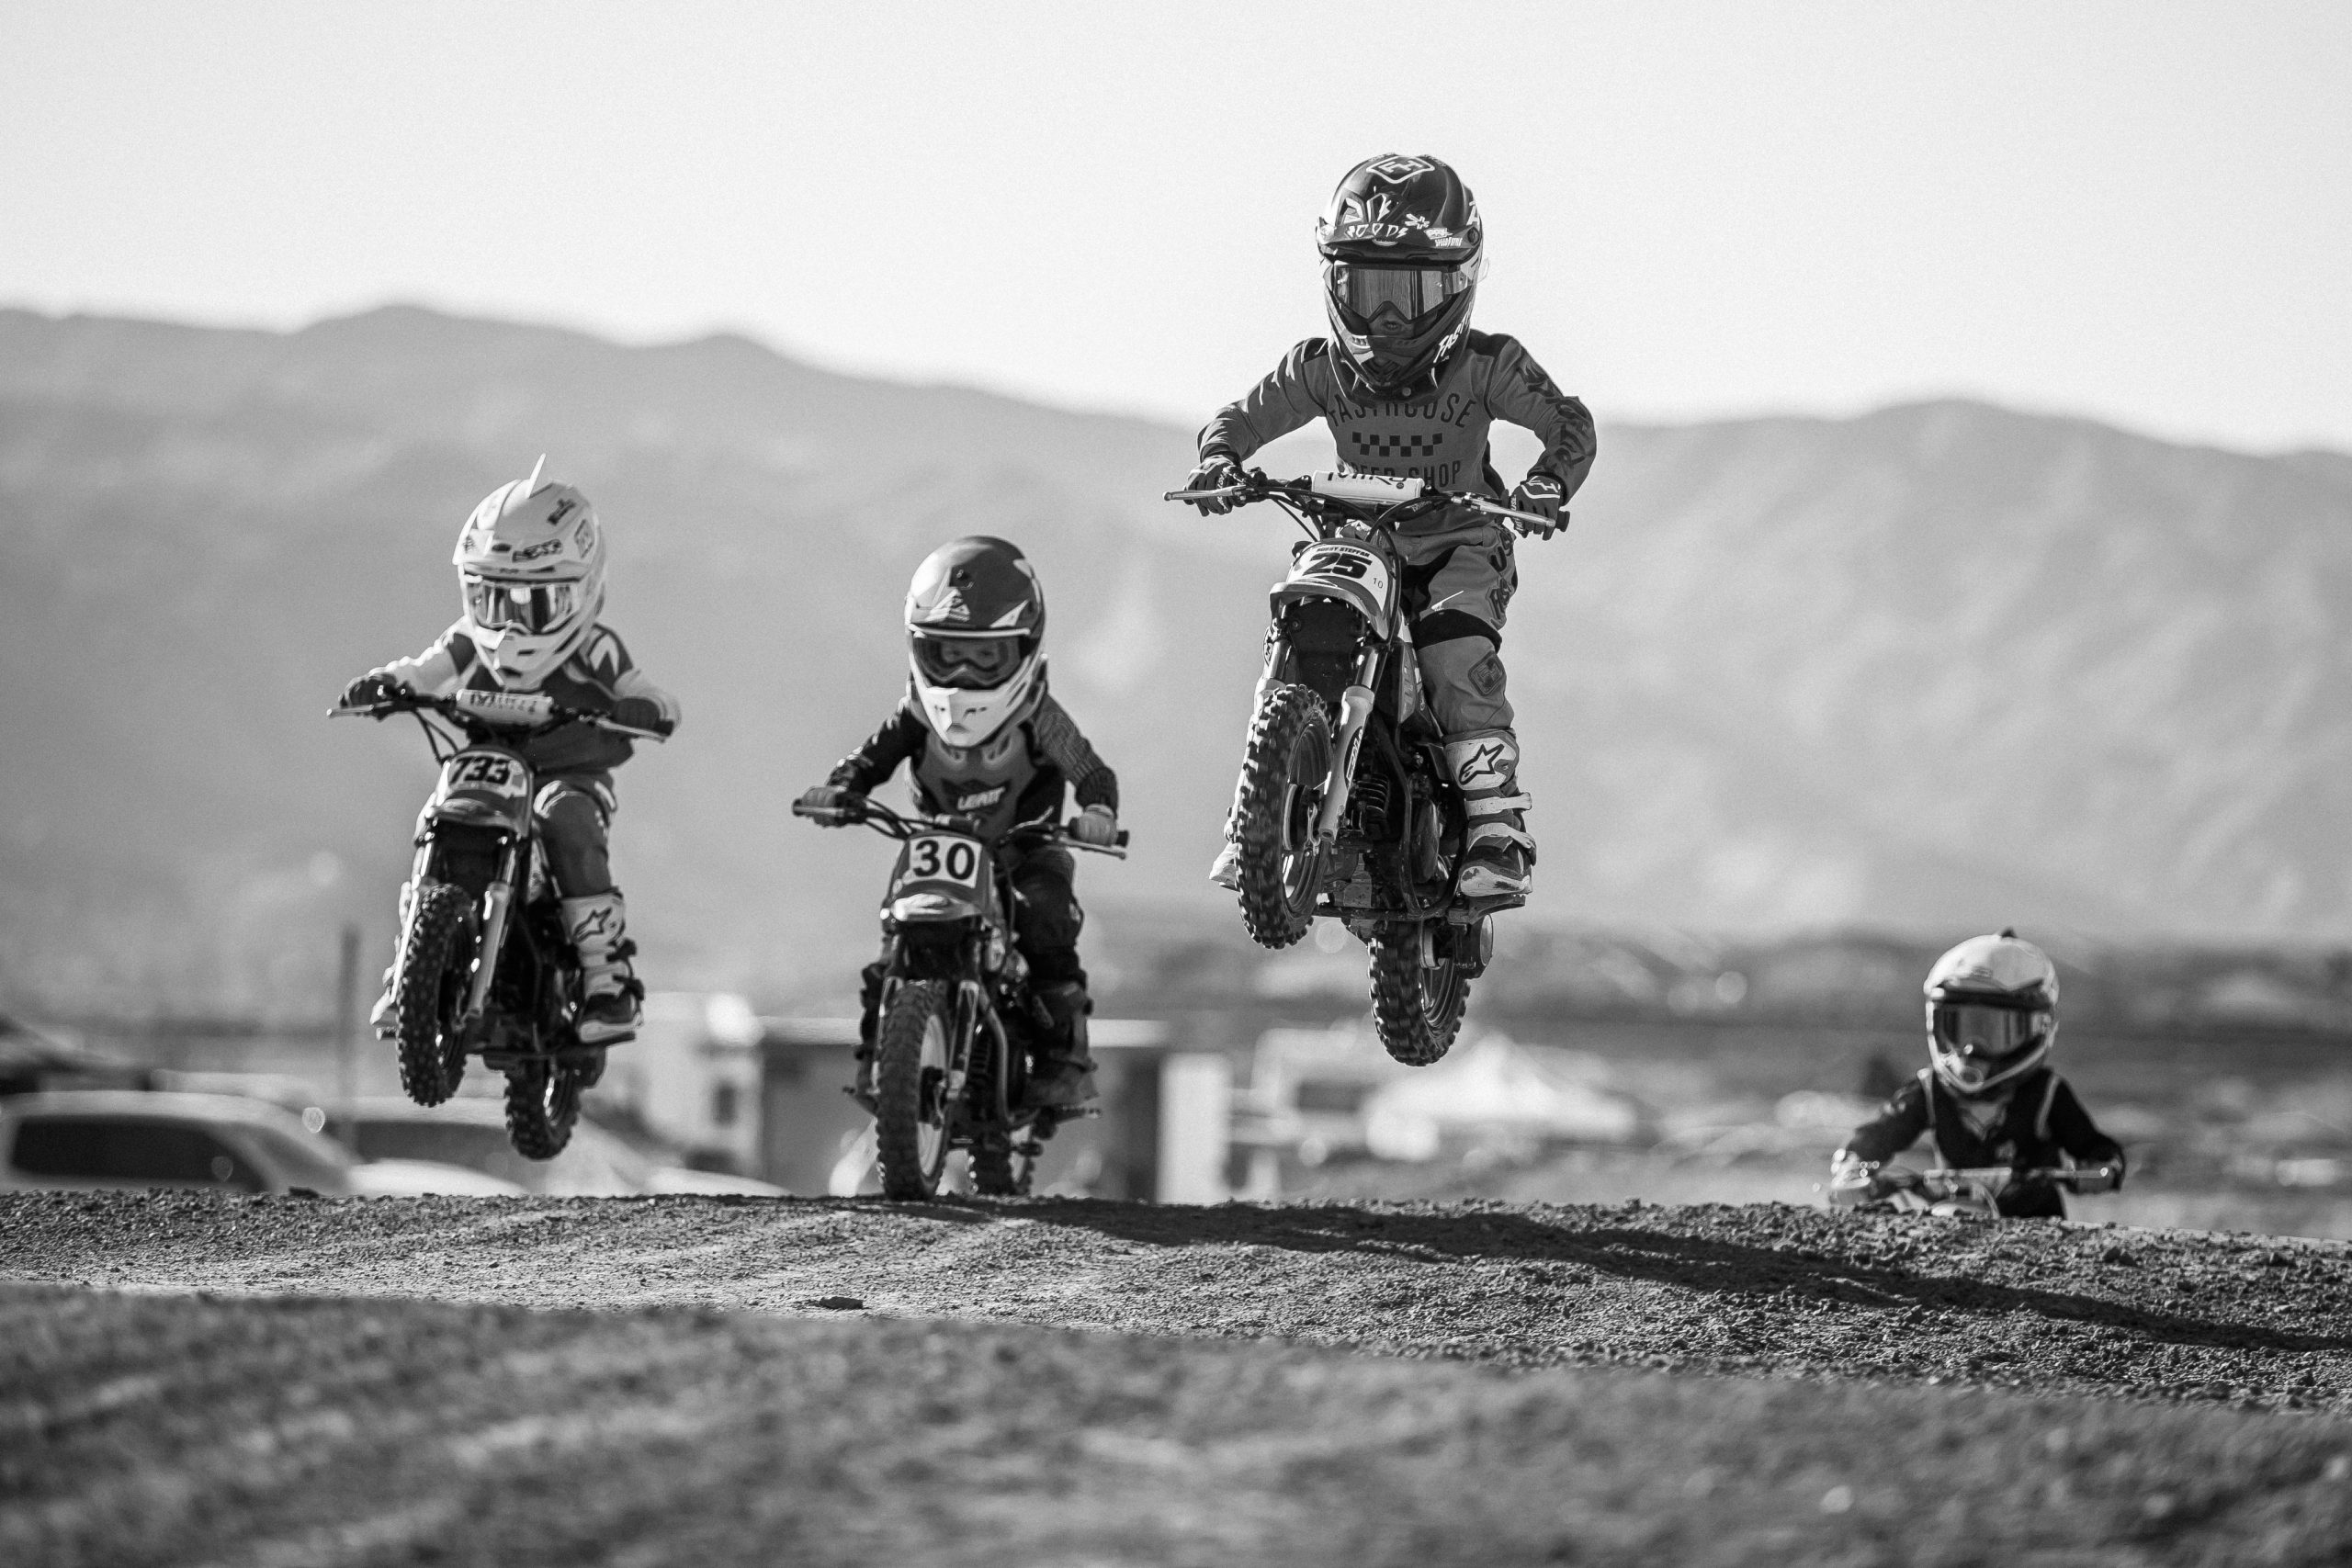 moto4kids, Moto 4 Kids, Moto 4 Kids Racing